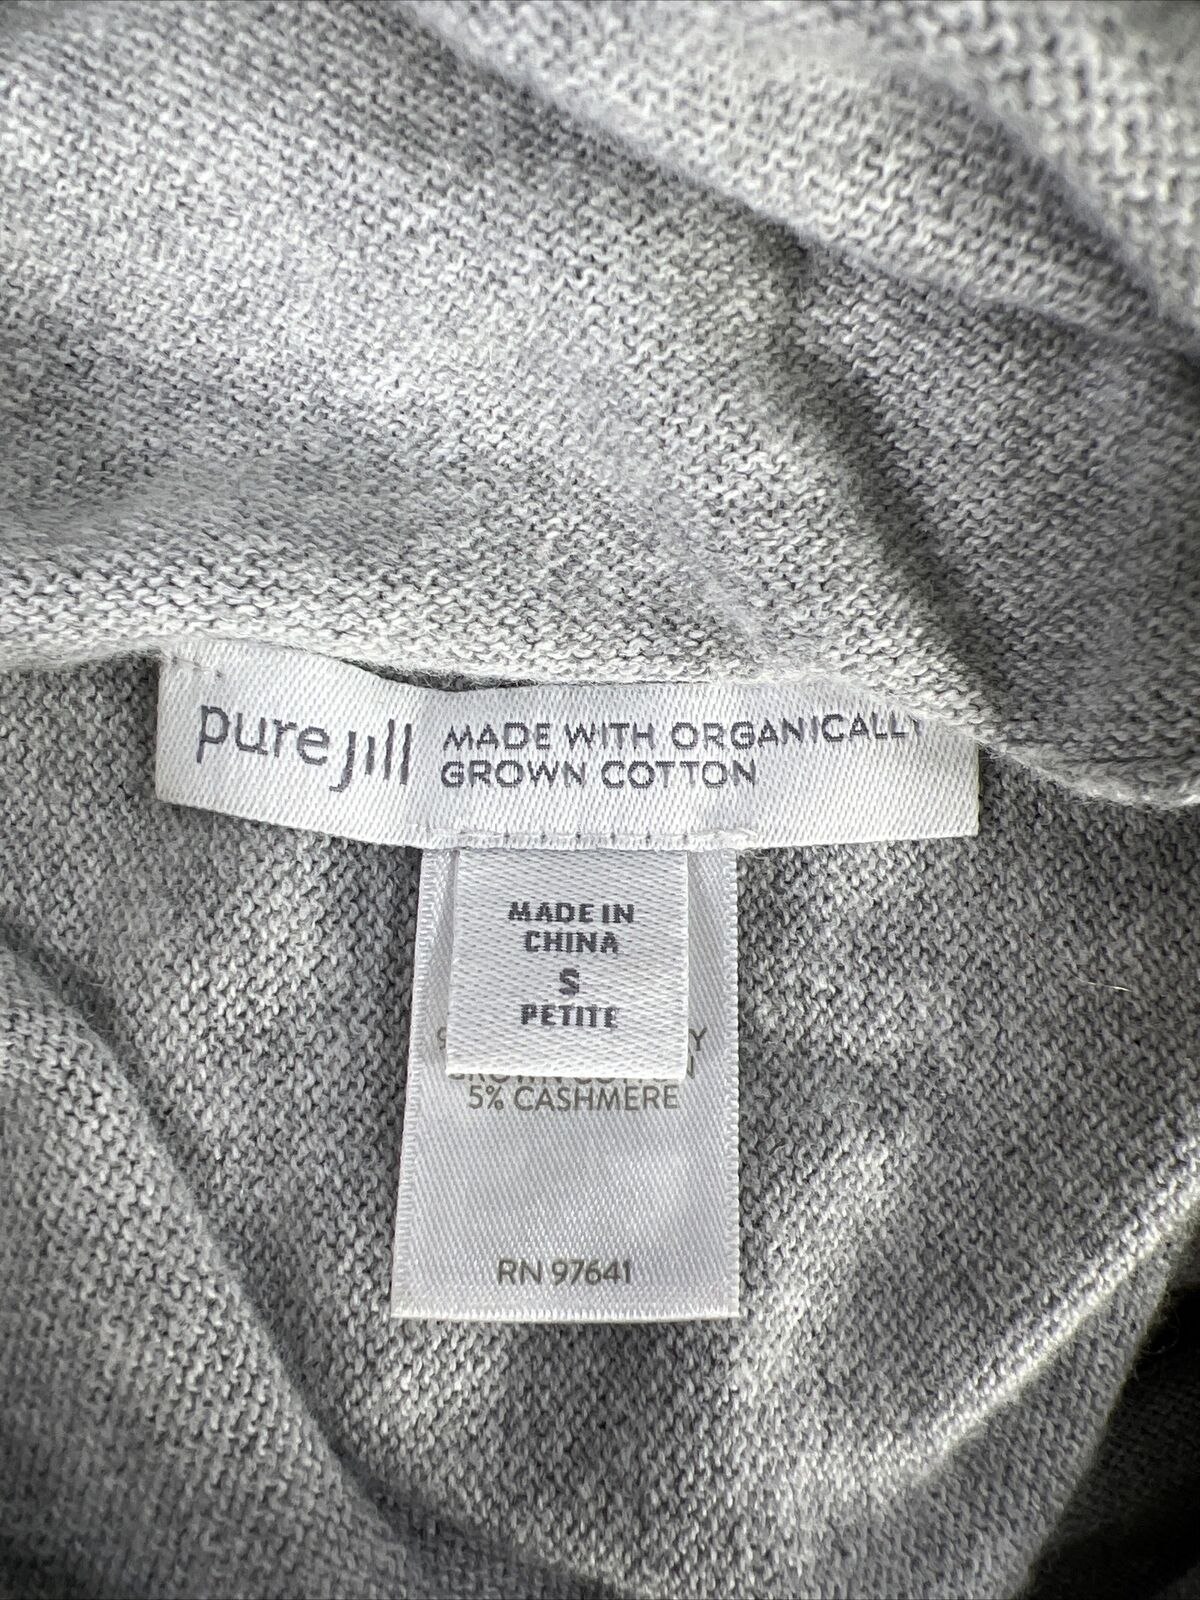 J. Jill Sudadera extragrande de algodón orgánico gris para mujer - Petite S